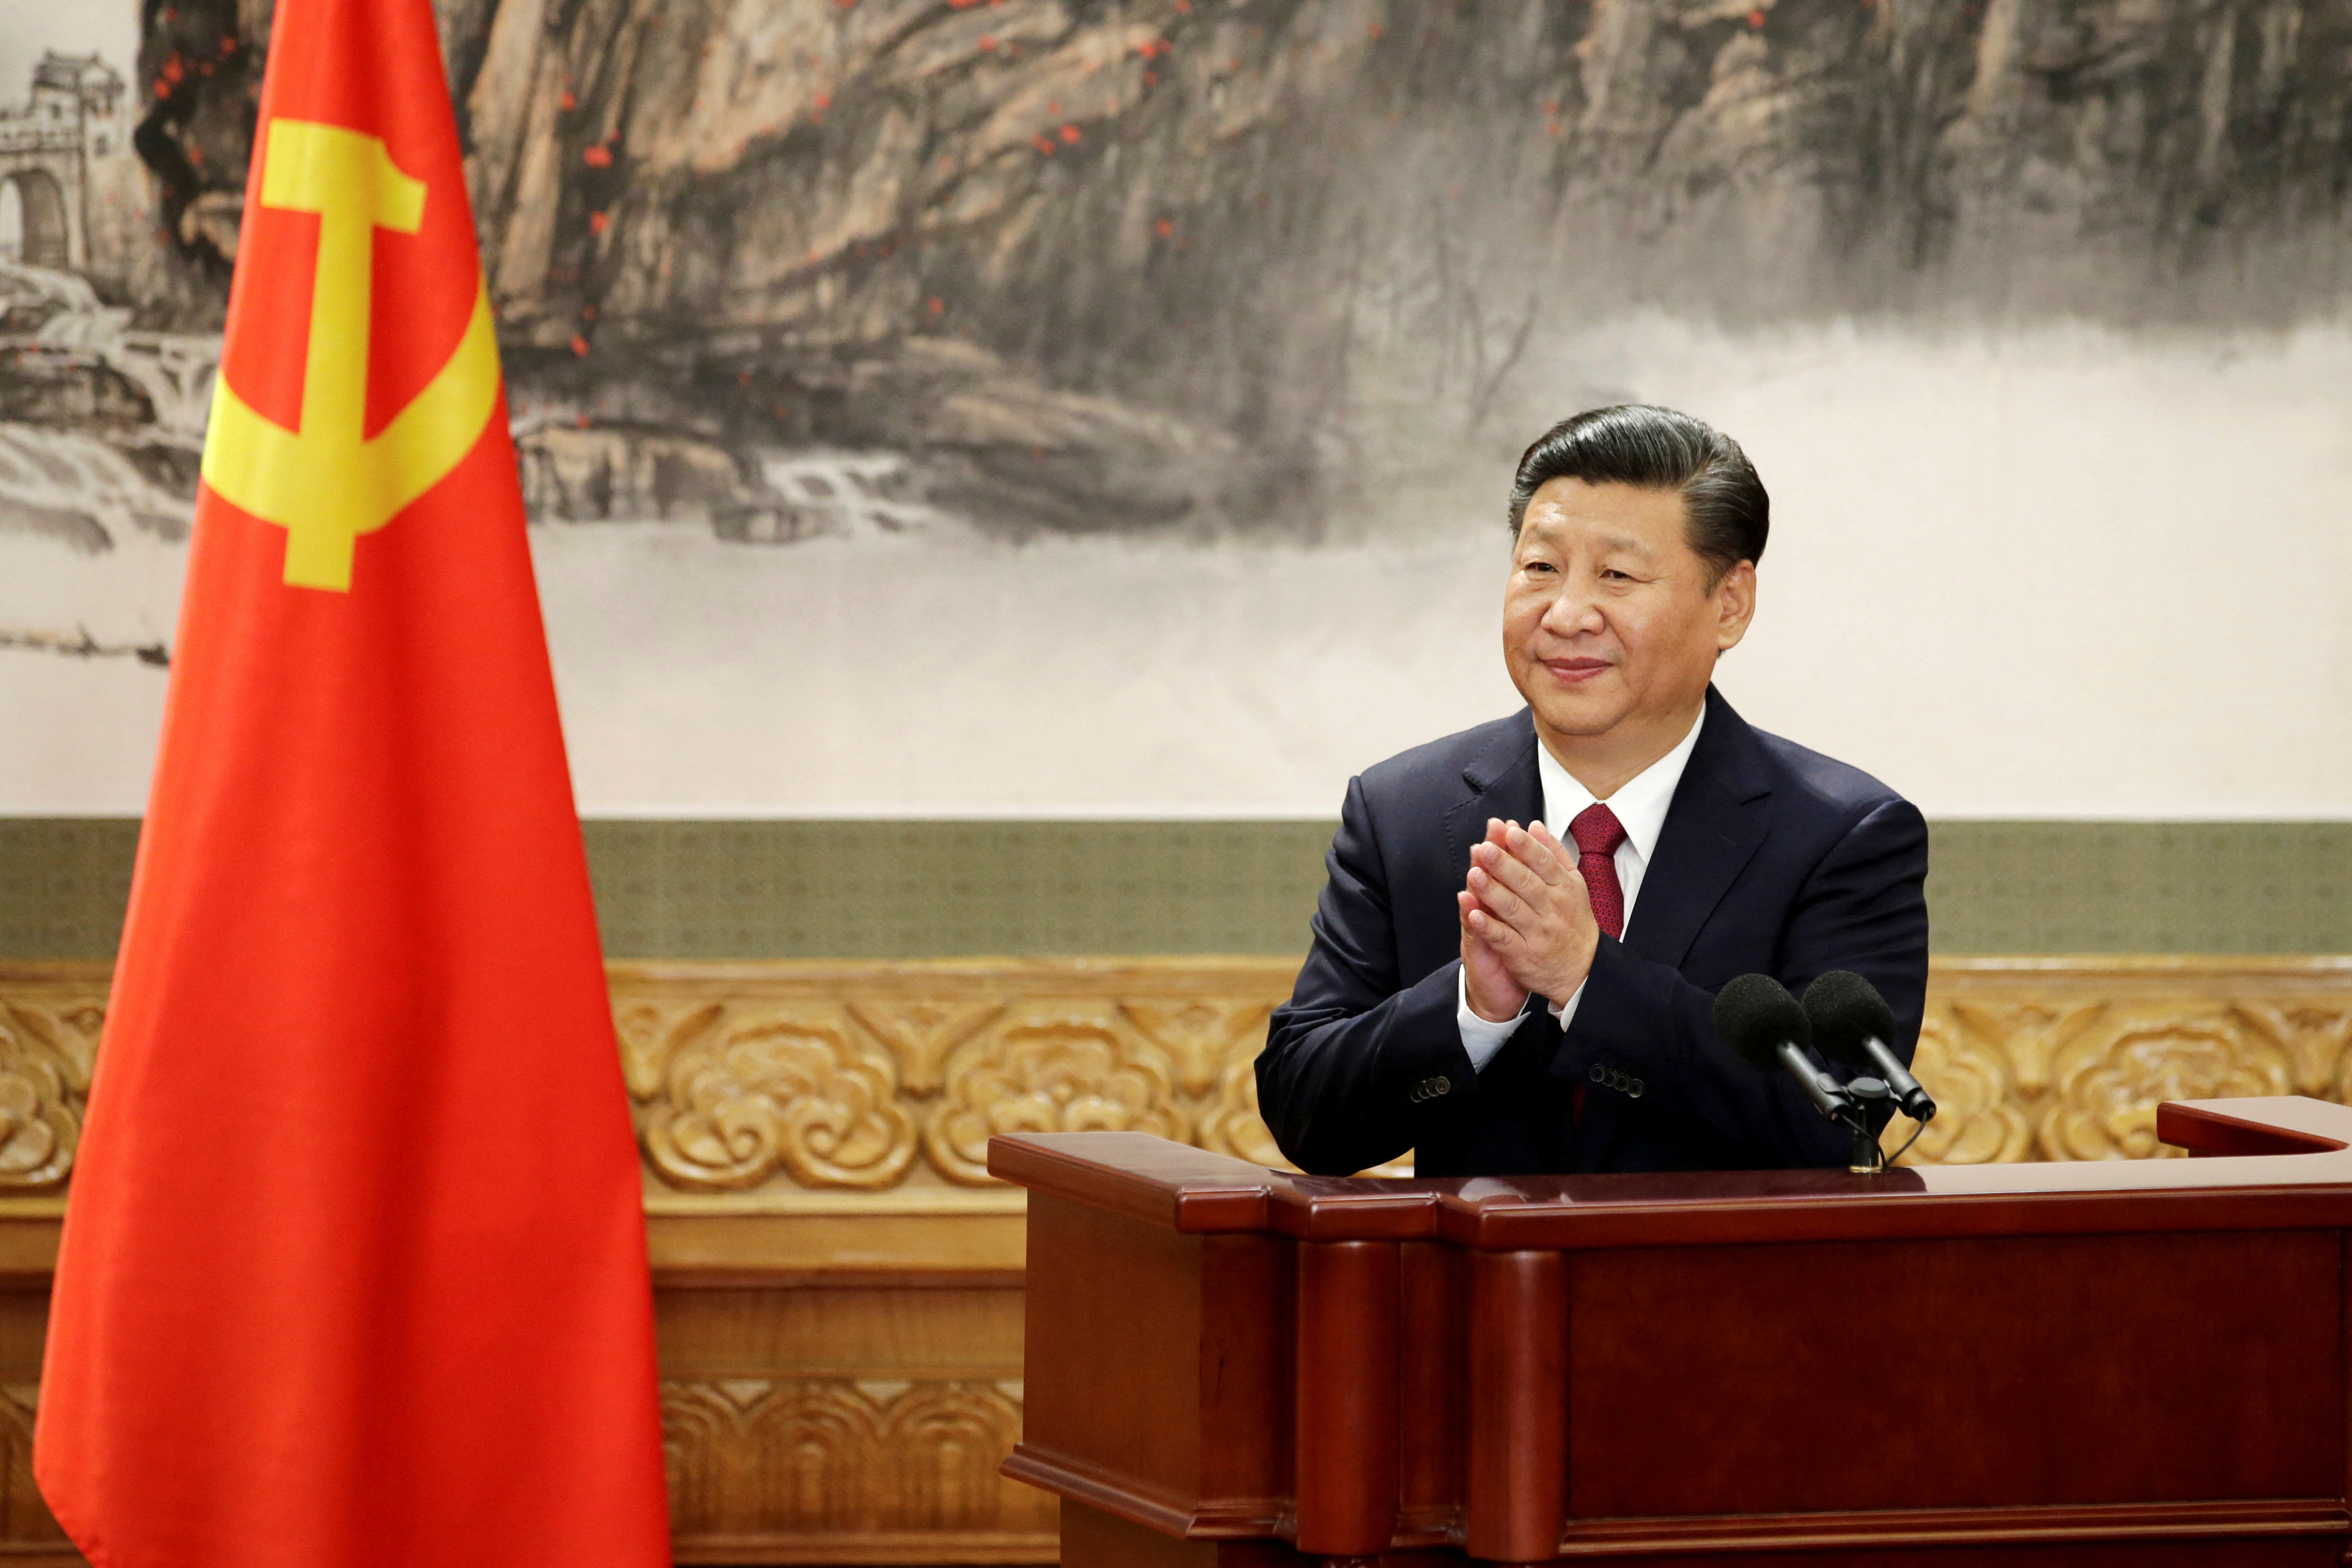 El régimen de Xi Jinping profundiza su influencia en América Latina (REUTERS/Jason Lee)